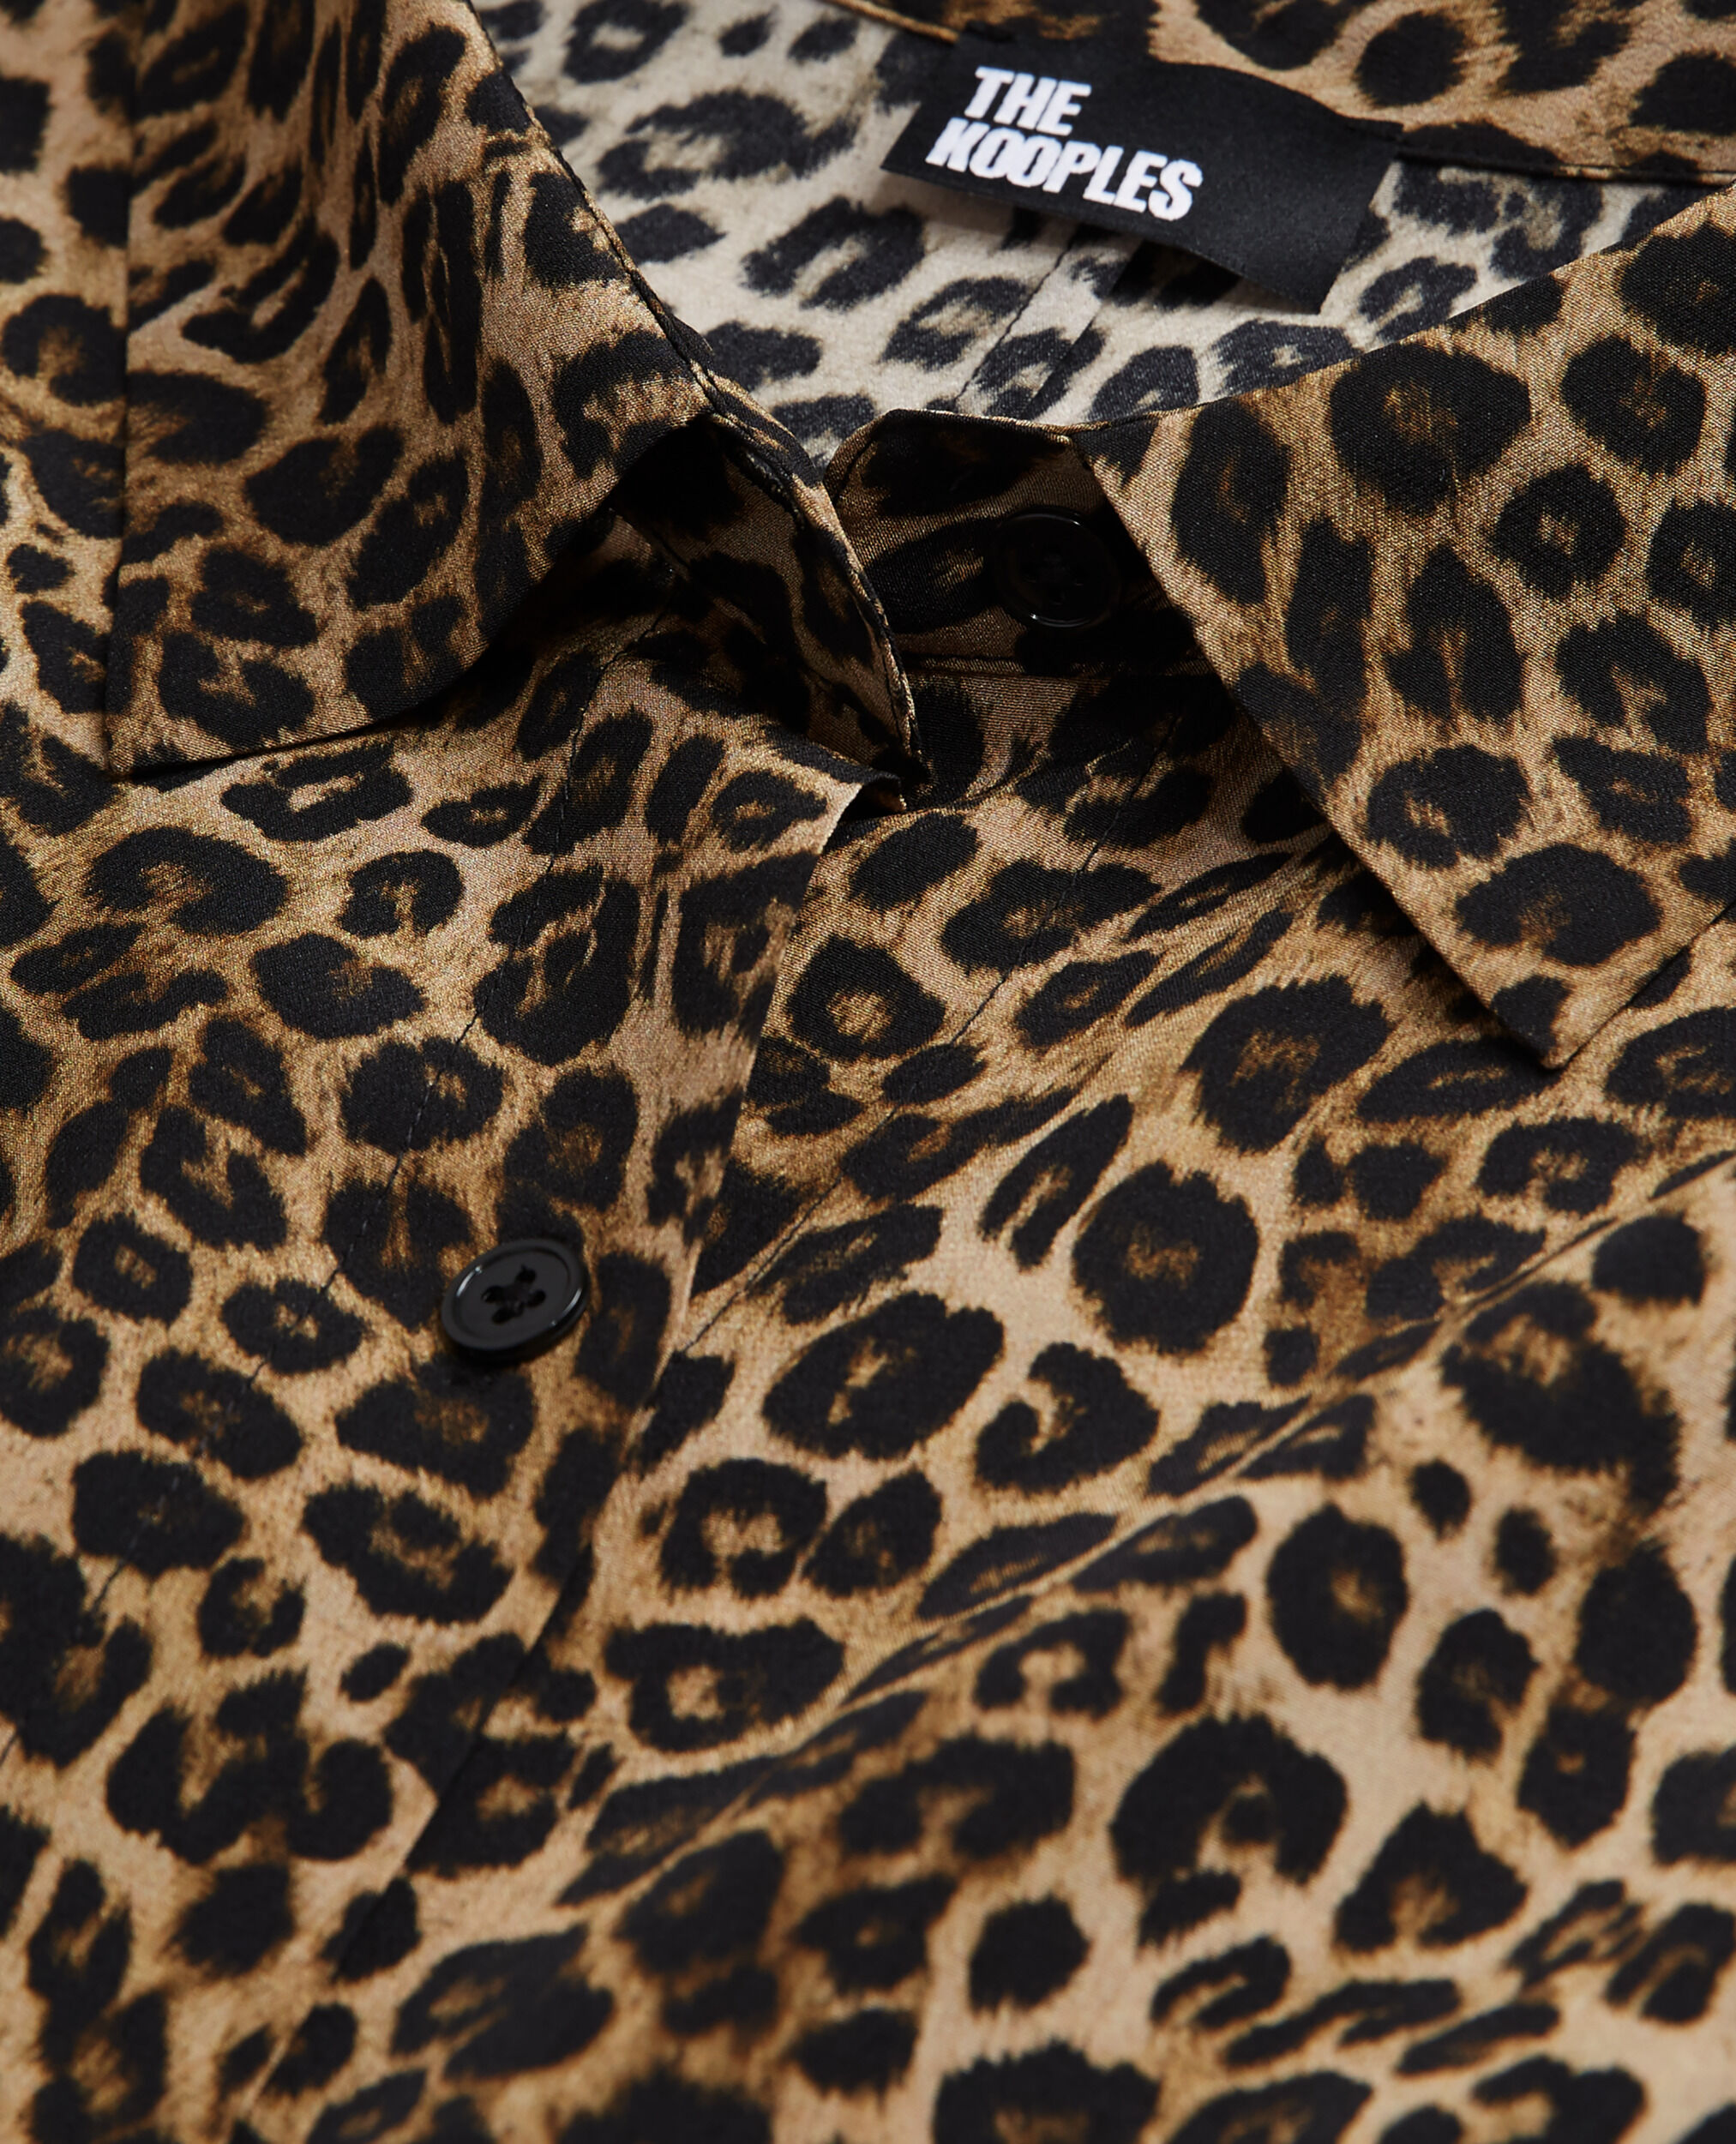 Vestido largo seda leopardo, LEOPARD, hi-res image number null